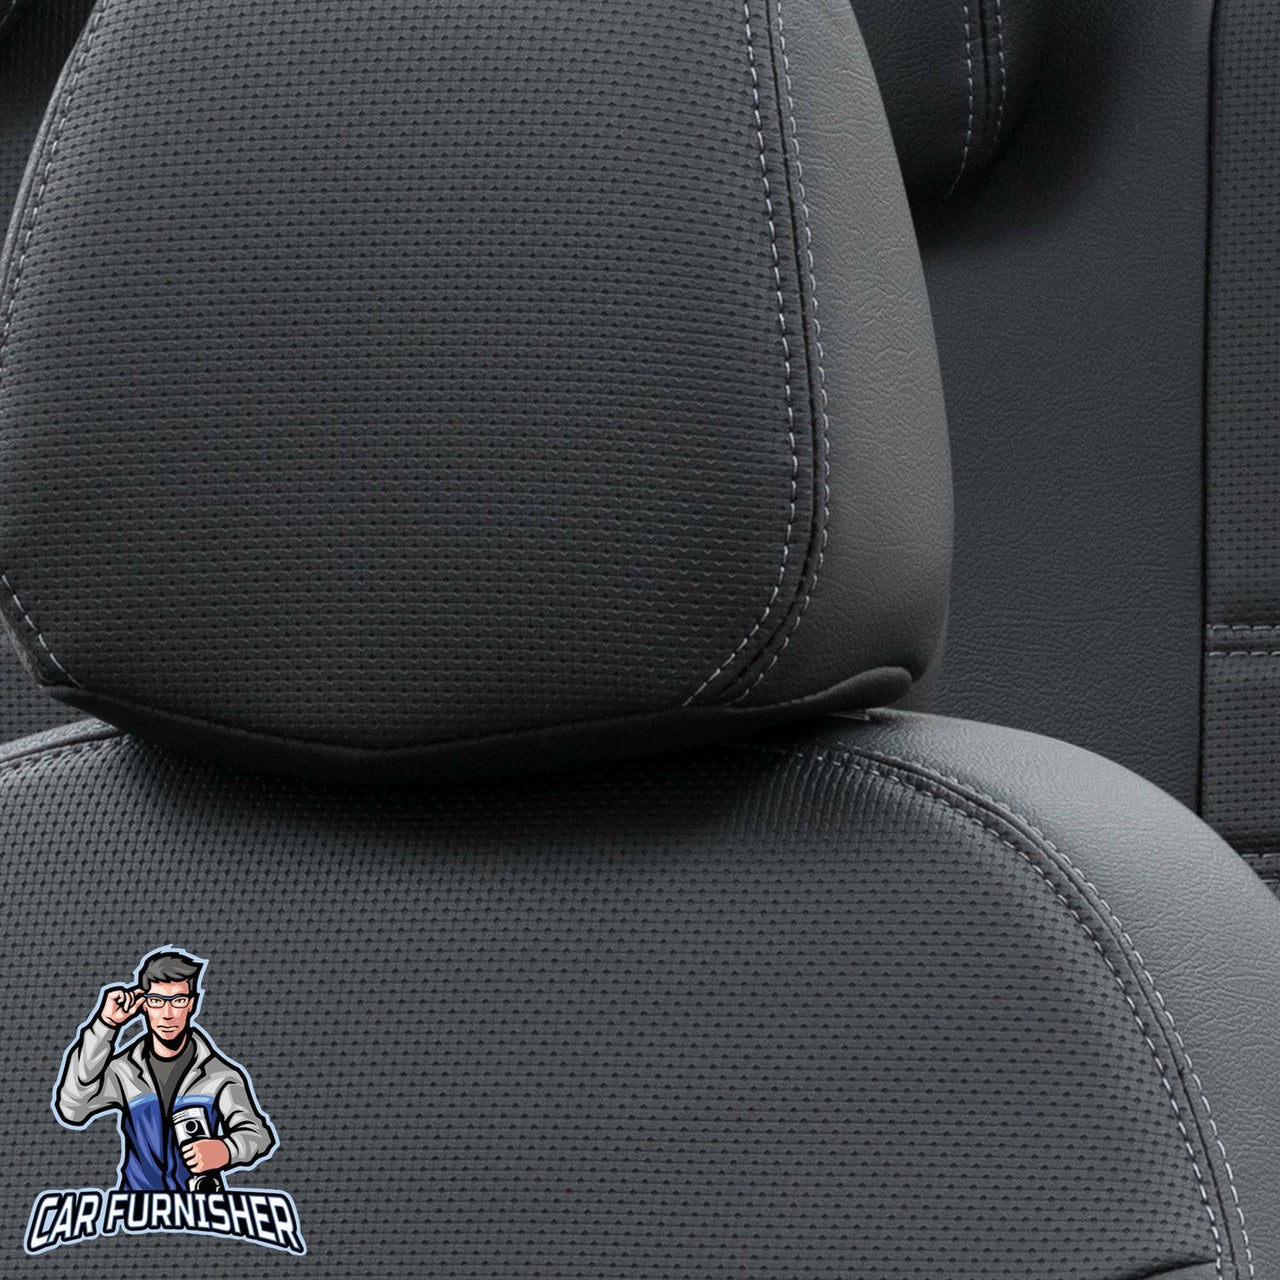 Volkswagen Amarok Seat Cover New York Leather Design Black Leather